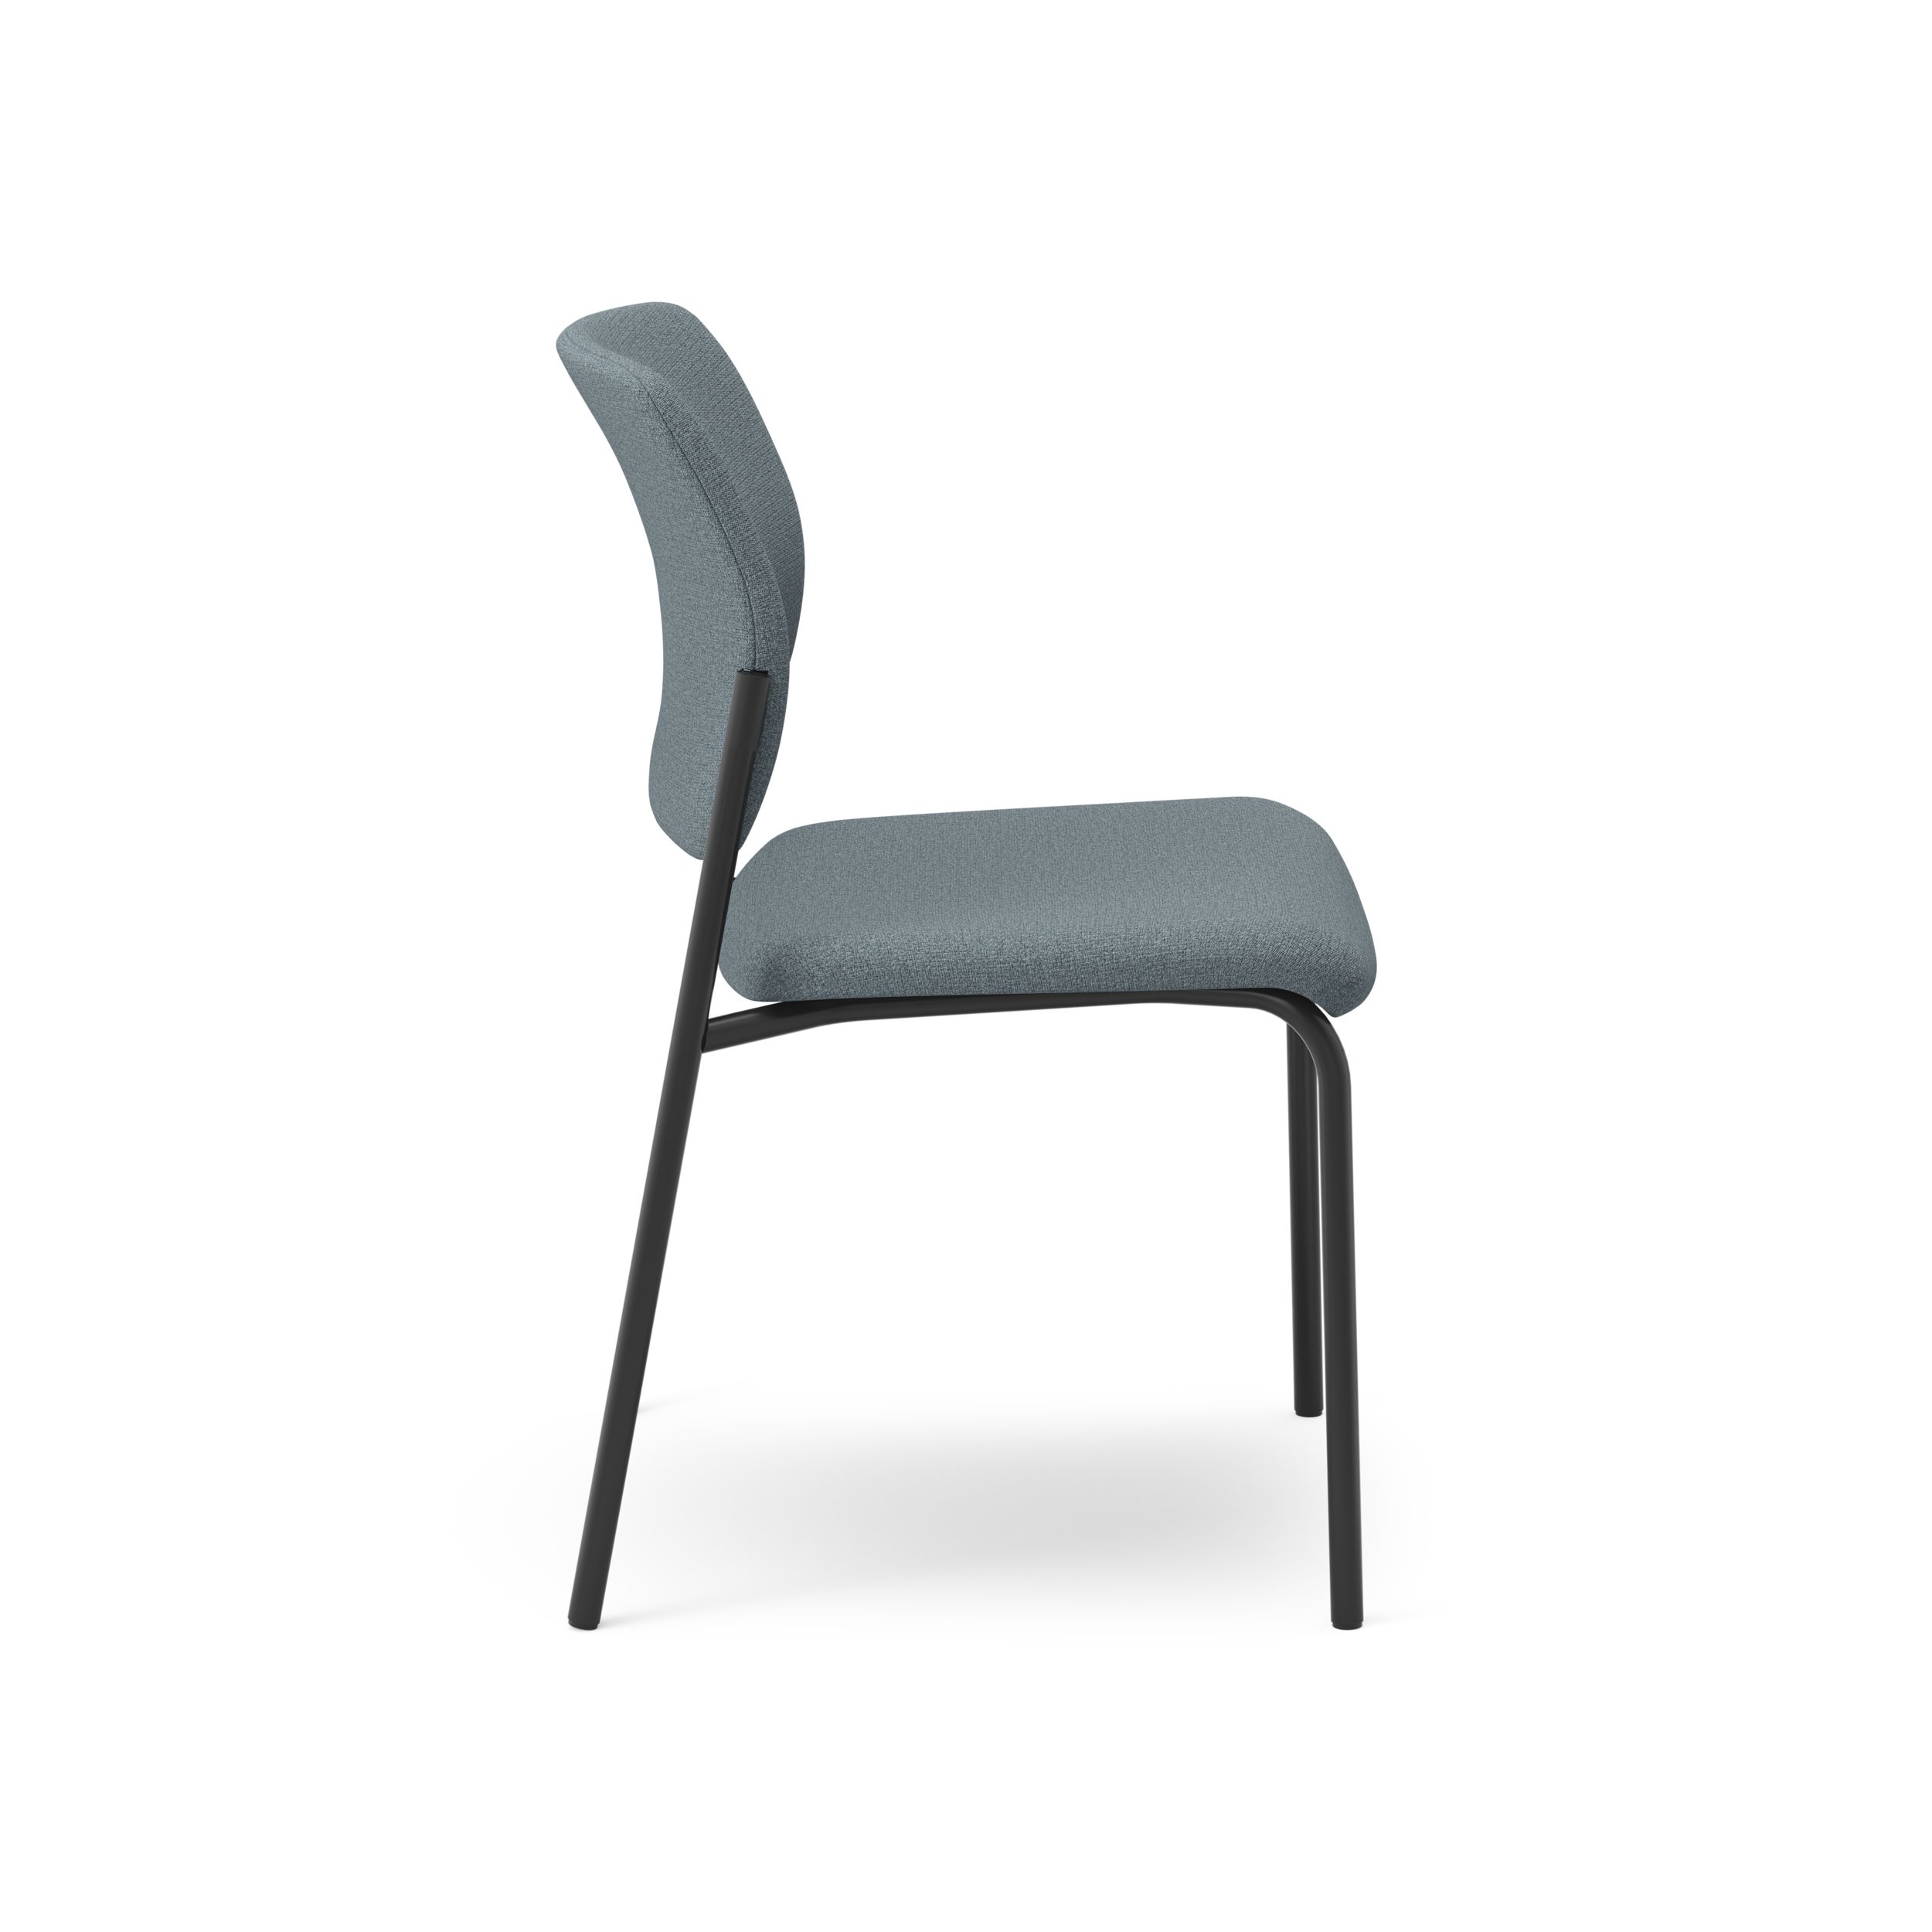 Vierfu-Stuhl D-1057-R51
Rcken gepolstert
Gestell schwarz